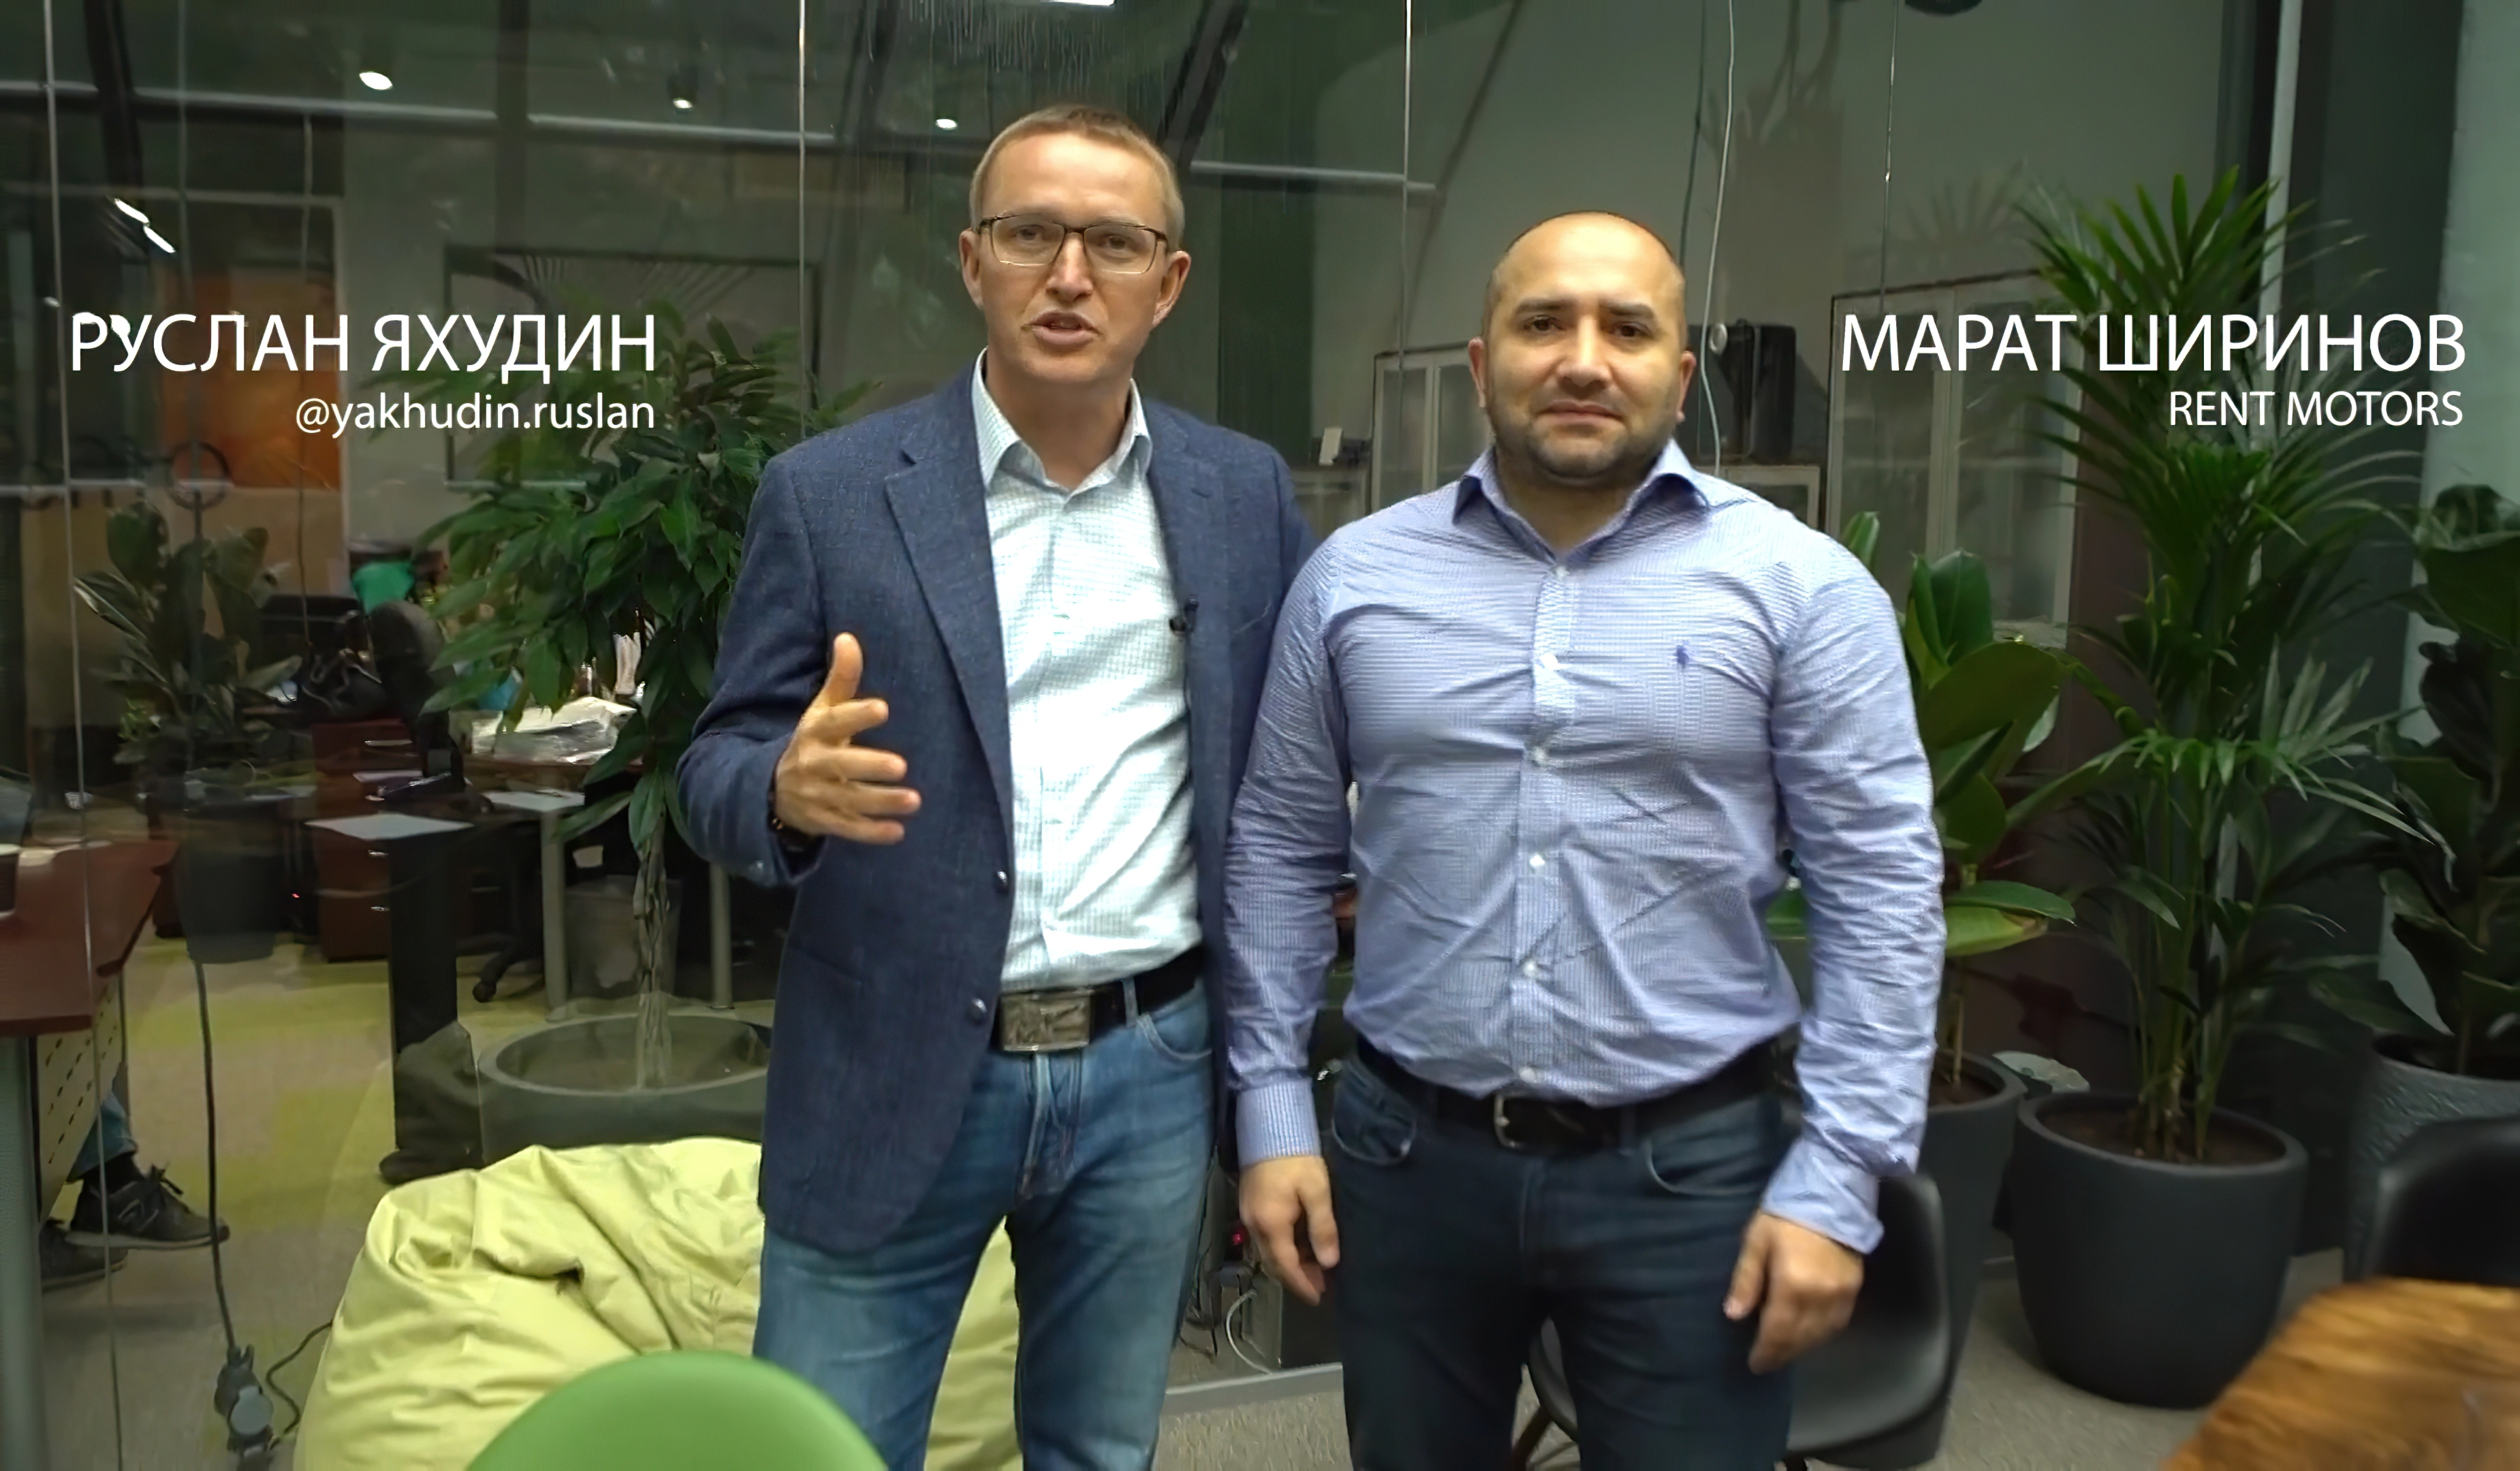 Марат Ширинов - владелец компании по аренде автомобилей «Рентмоторс»